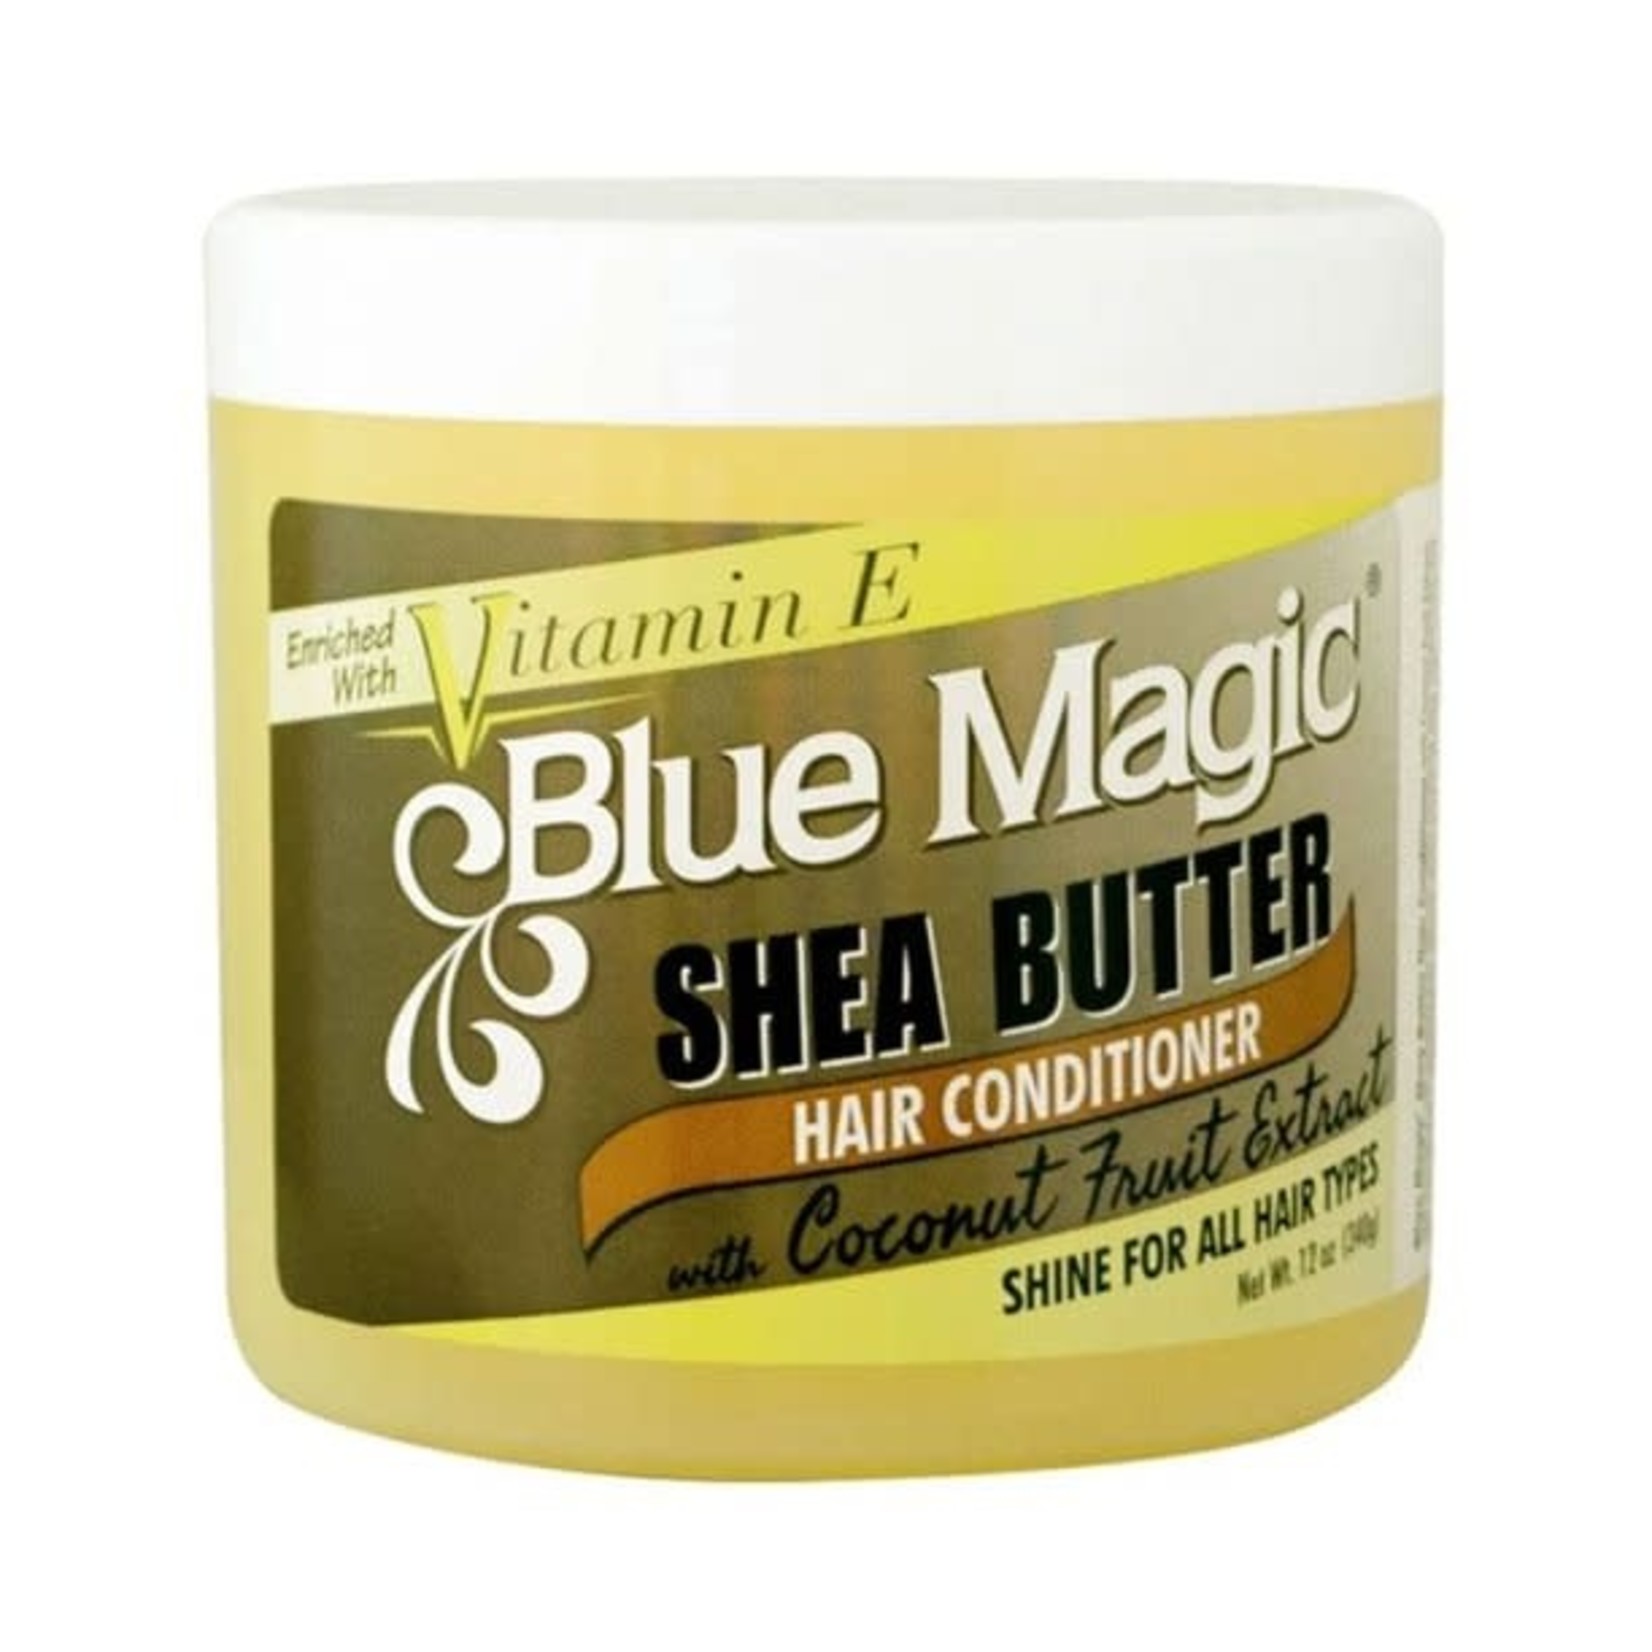 Blue Magic Shea Butter Hair Conditioner